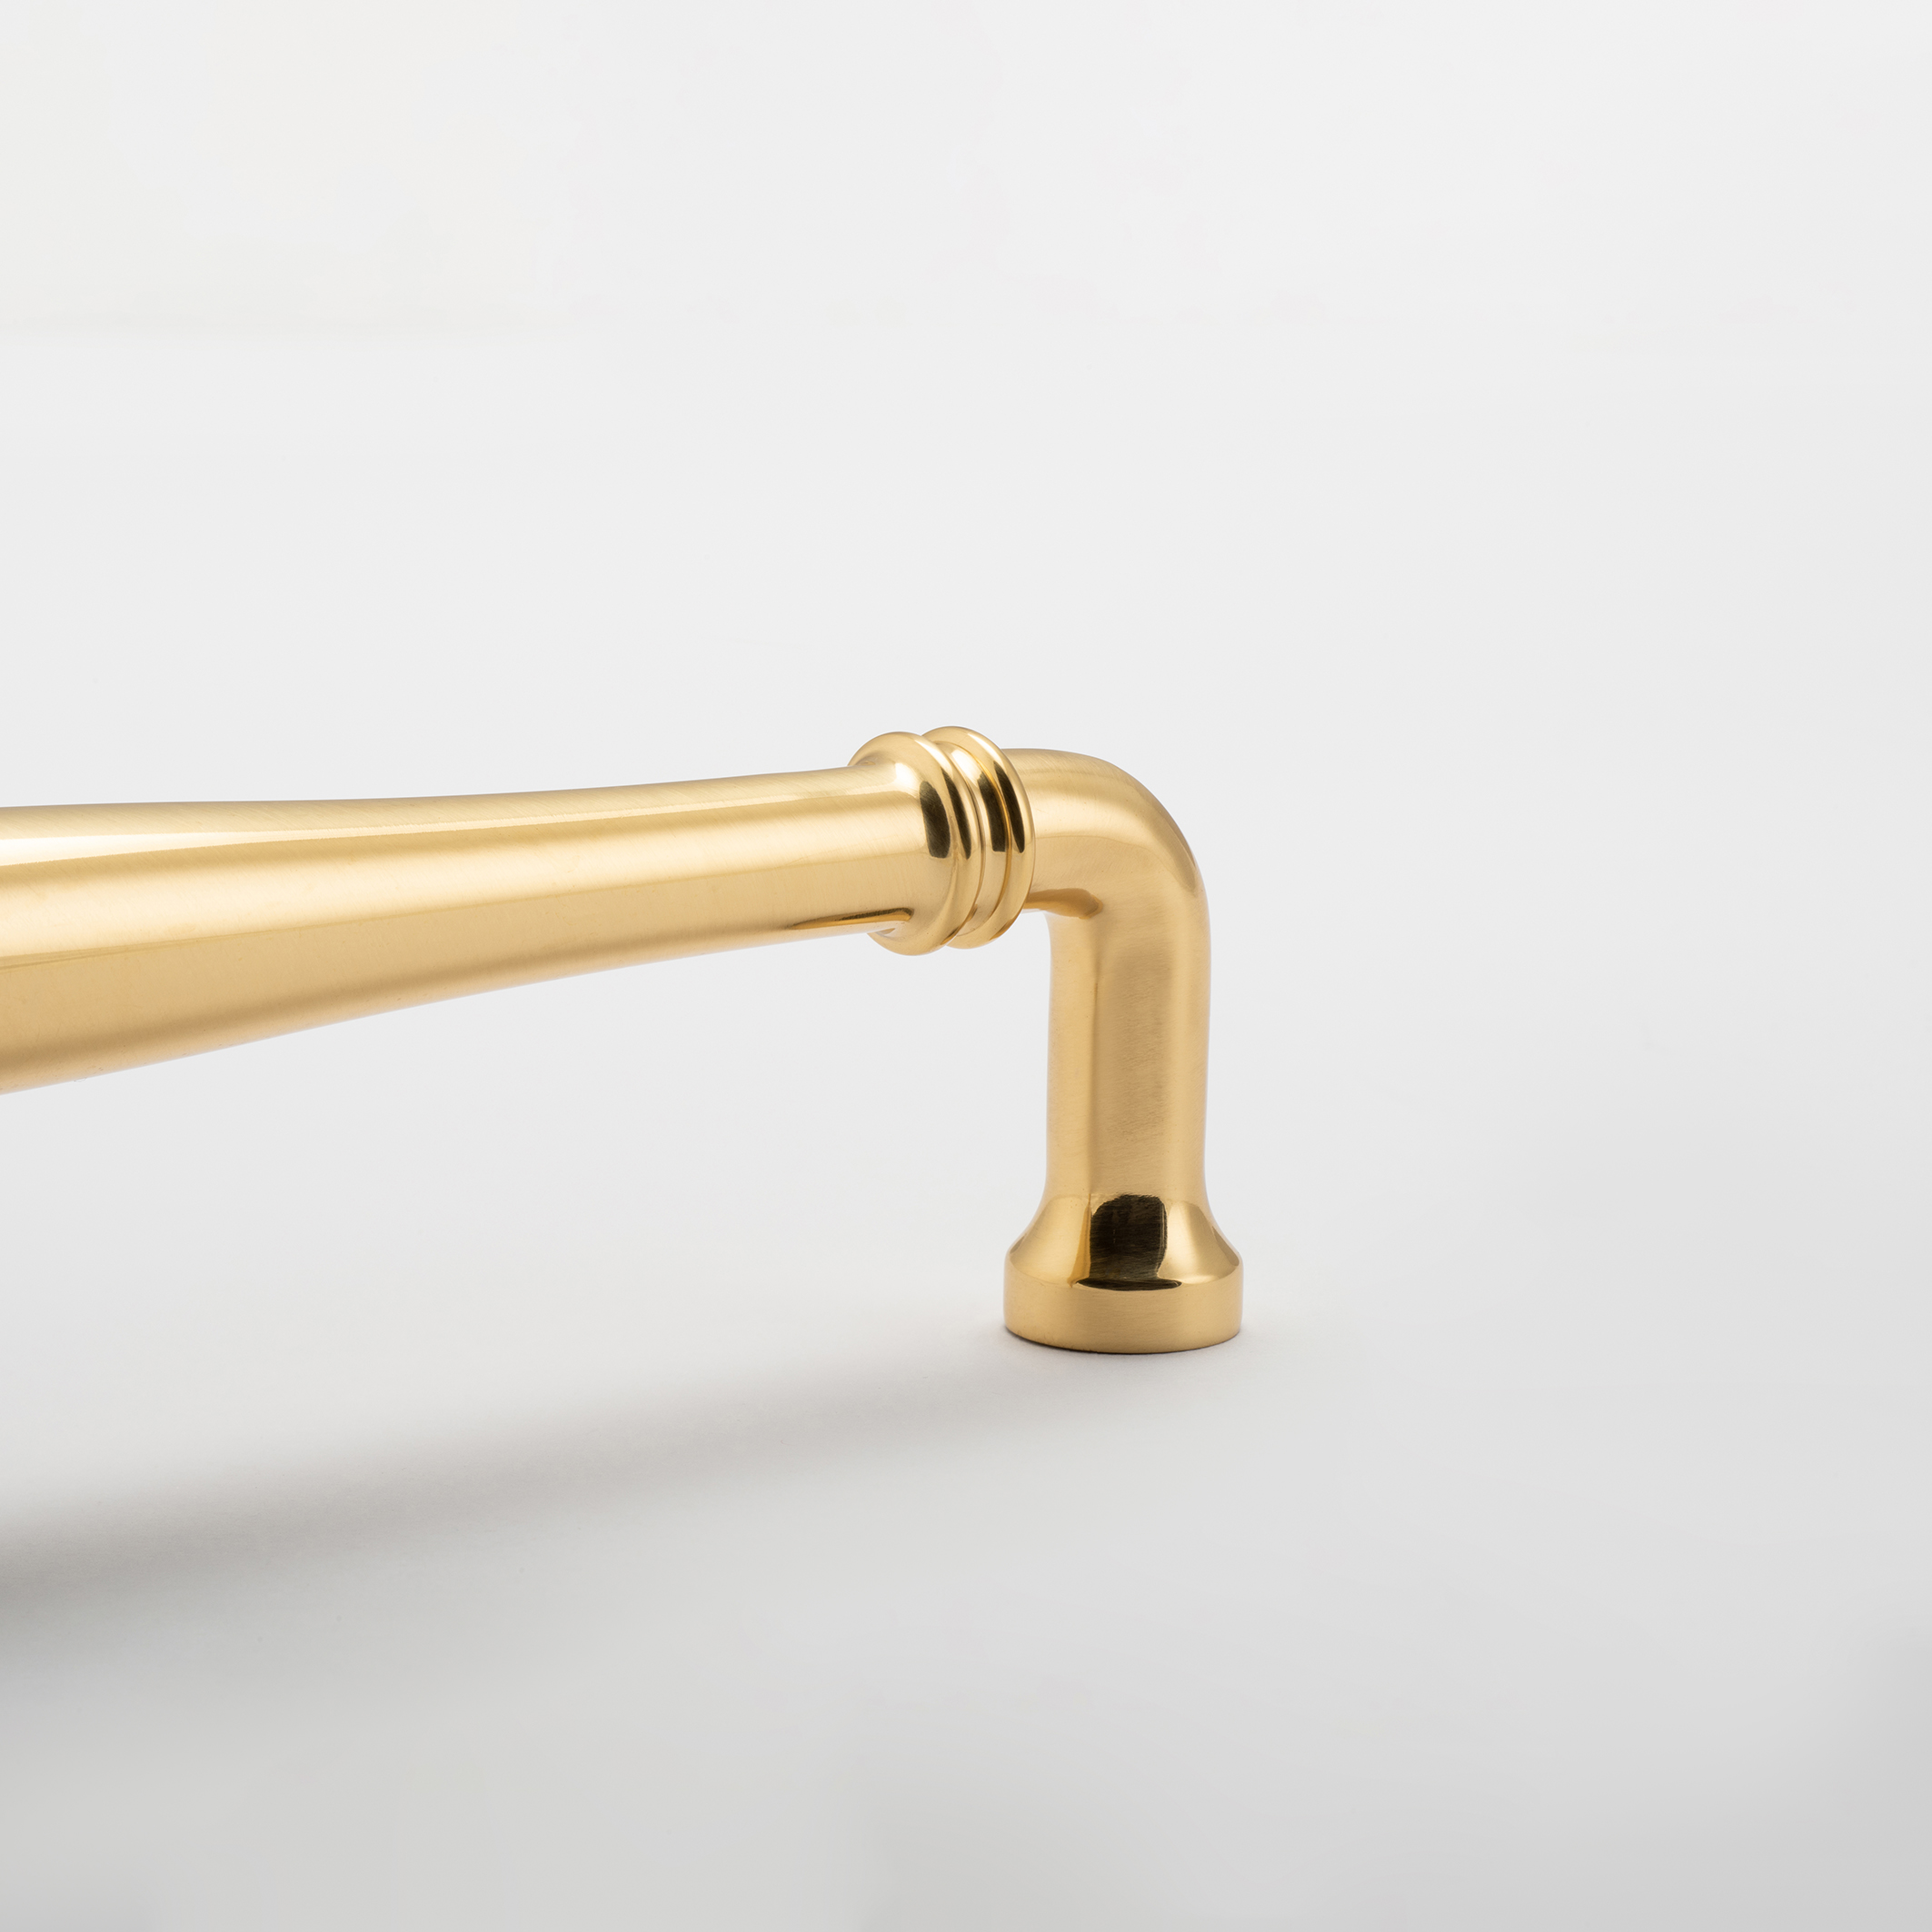 21060 - Sarlat Cabinet Pull - CTC128mm - Polished Brass